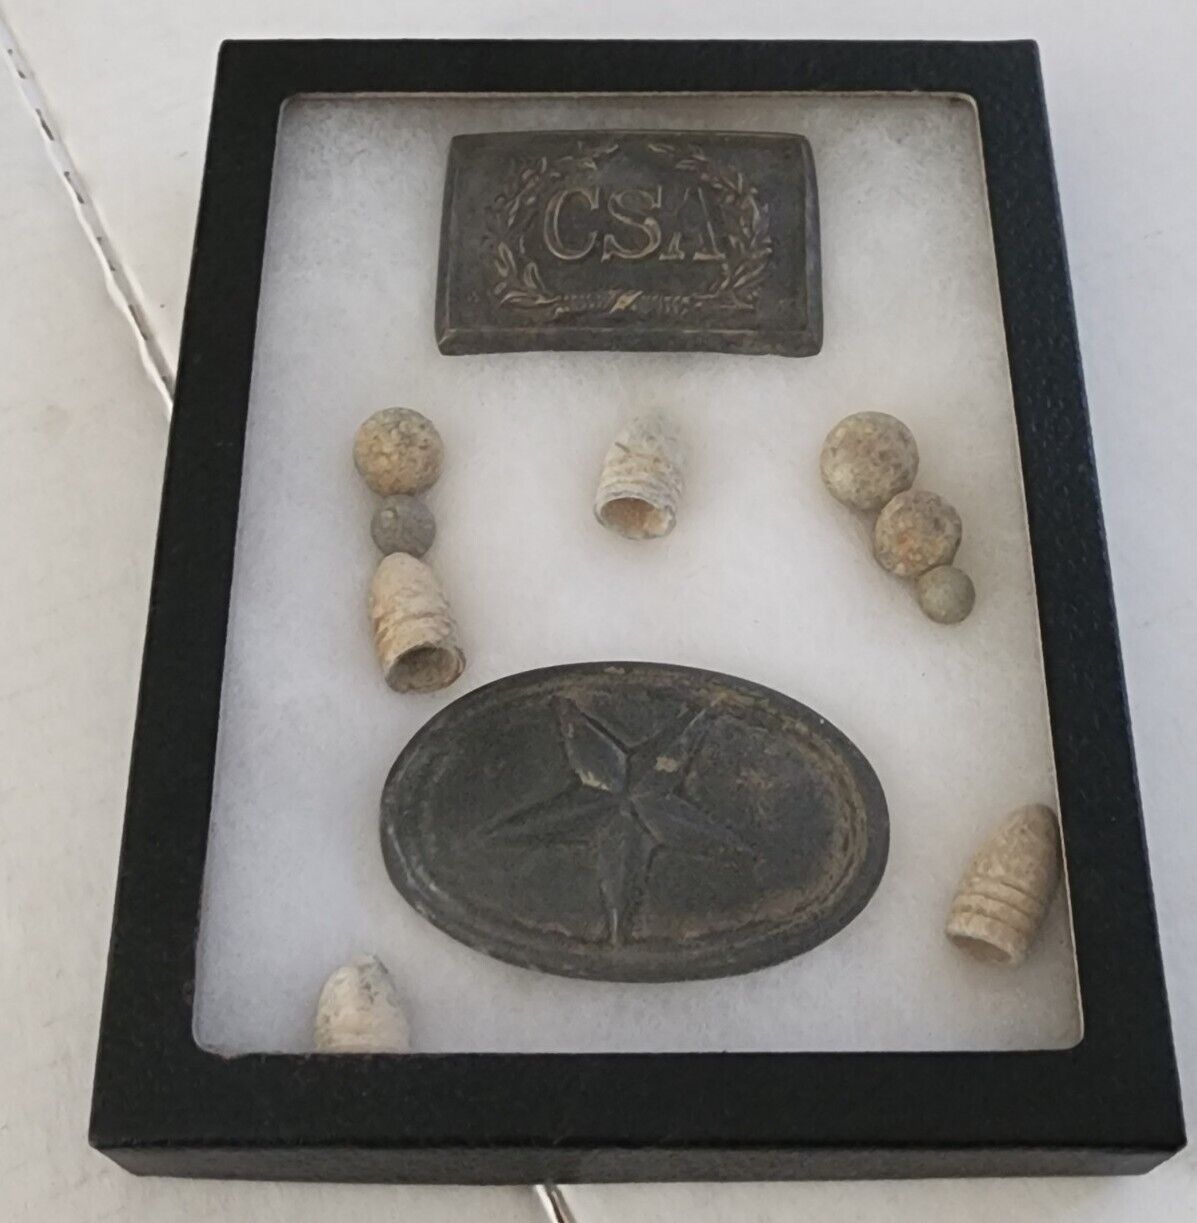 Reproduction Belt Buckles,Civil War Relics lot - Dug up bullets, coins and more